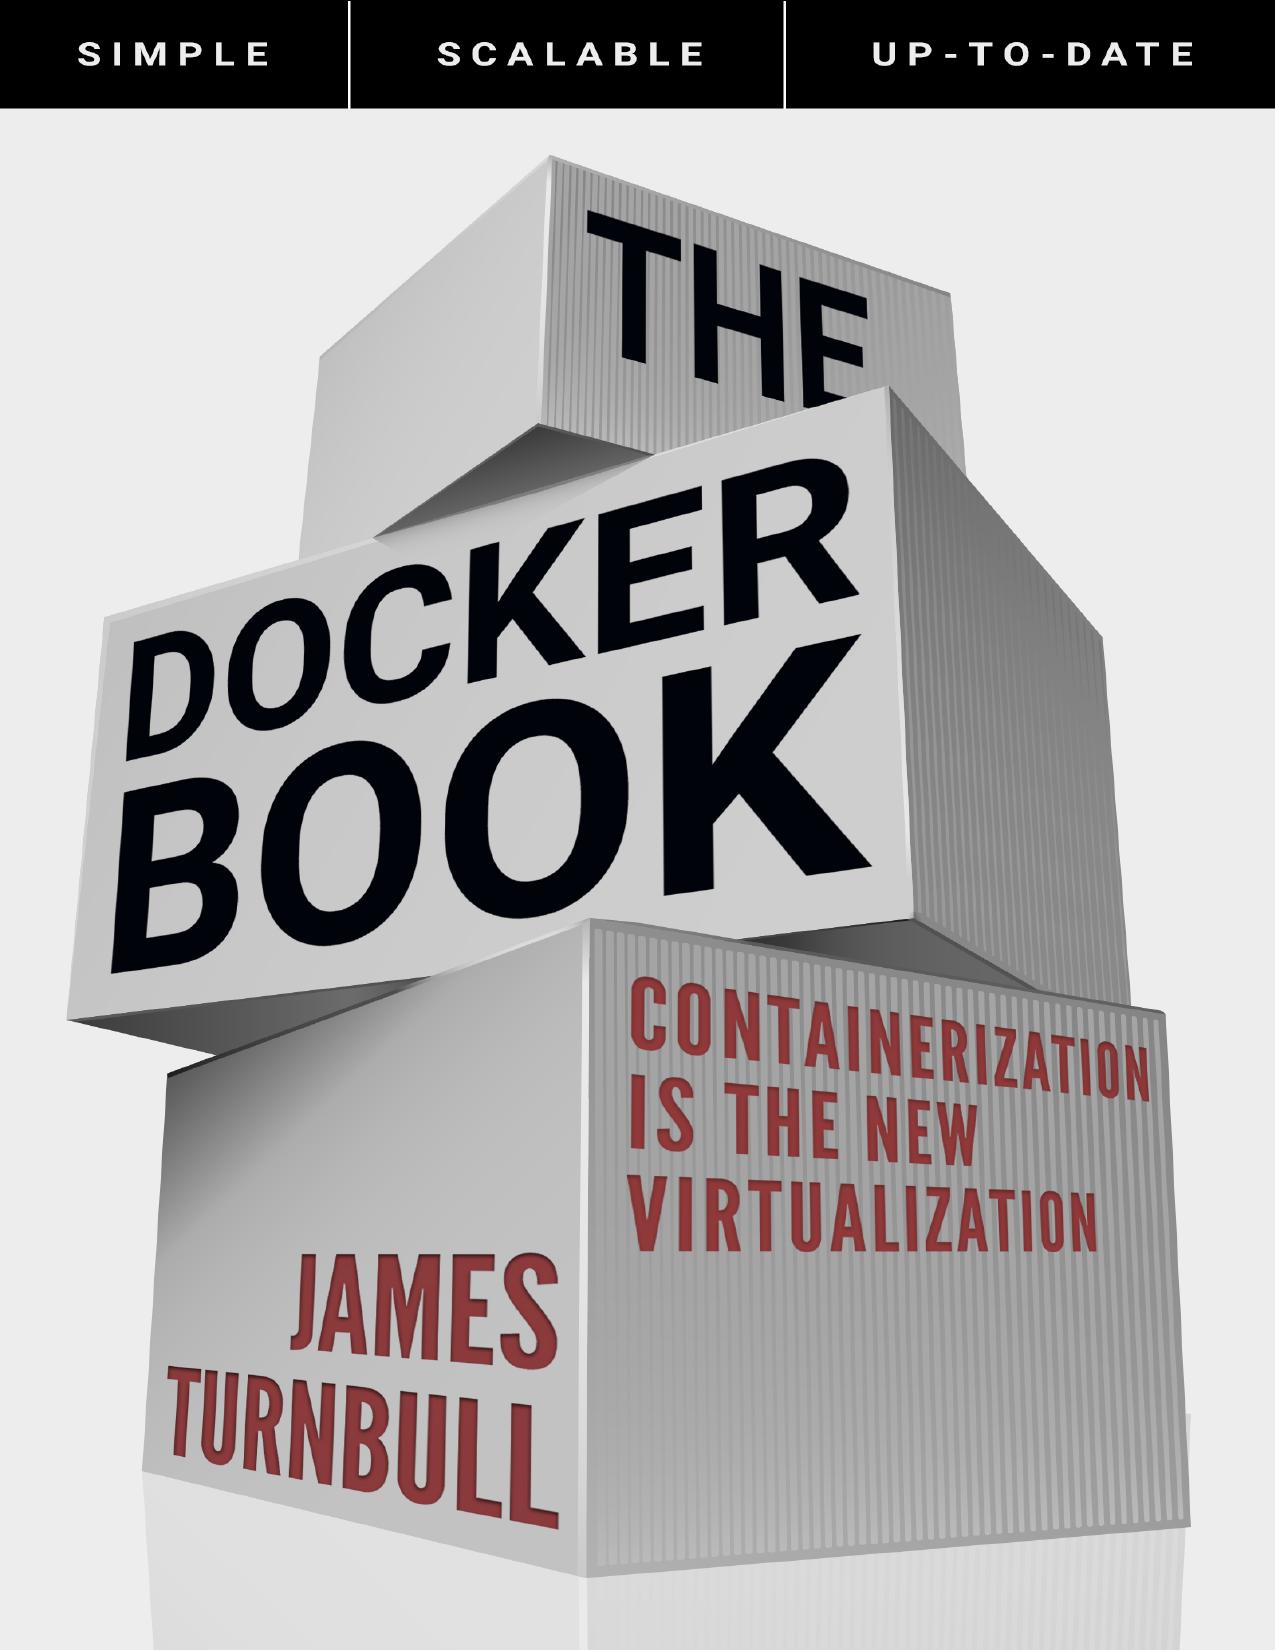 The Docker Book